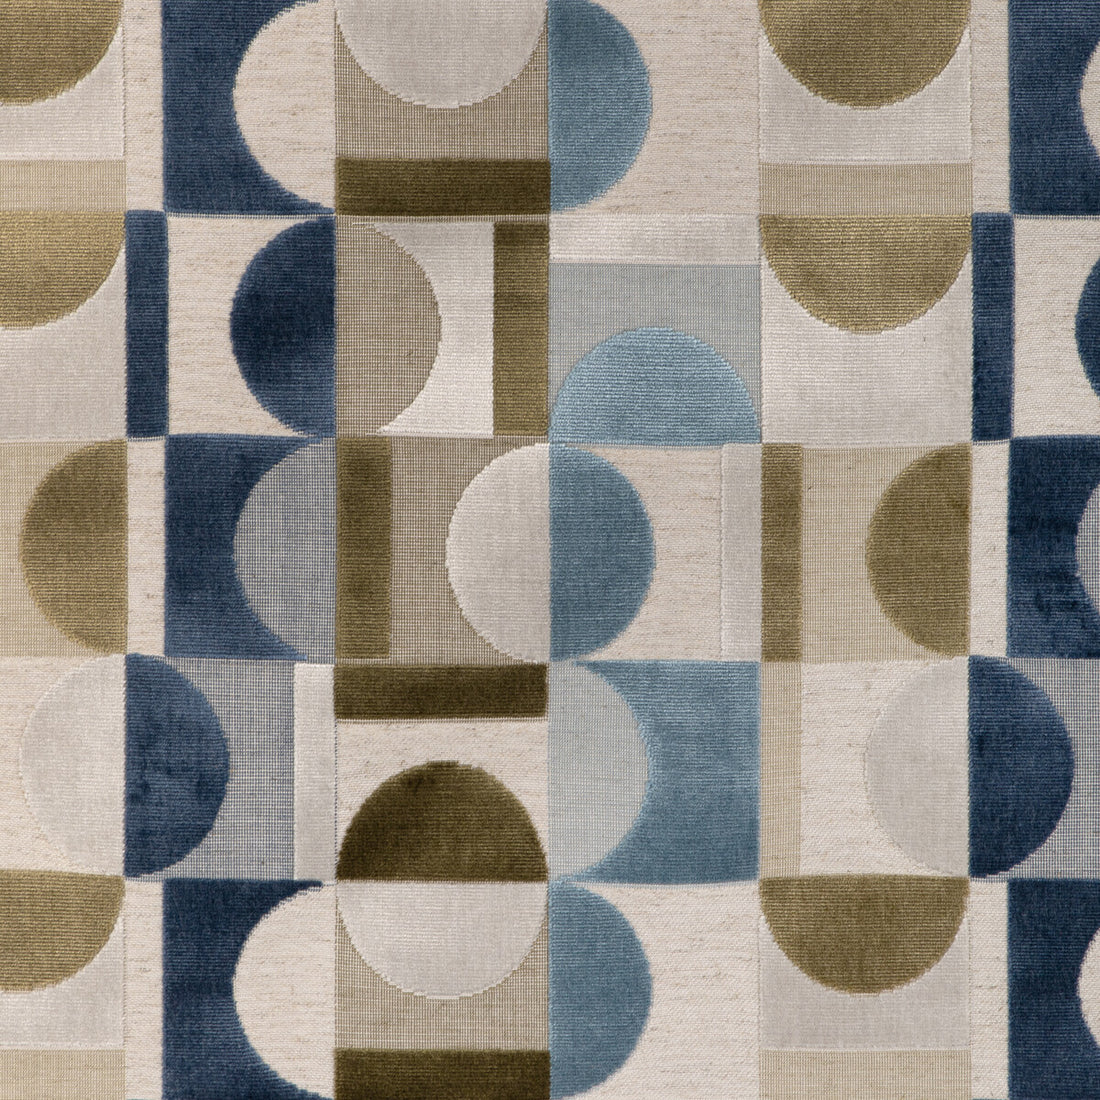 Kravet Design fabric in 36990-315 color - pattern 36990.315.0 - by Kravet Design in the Modern Velvets collection